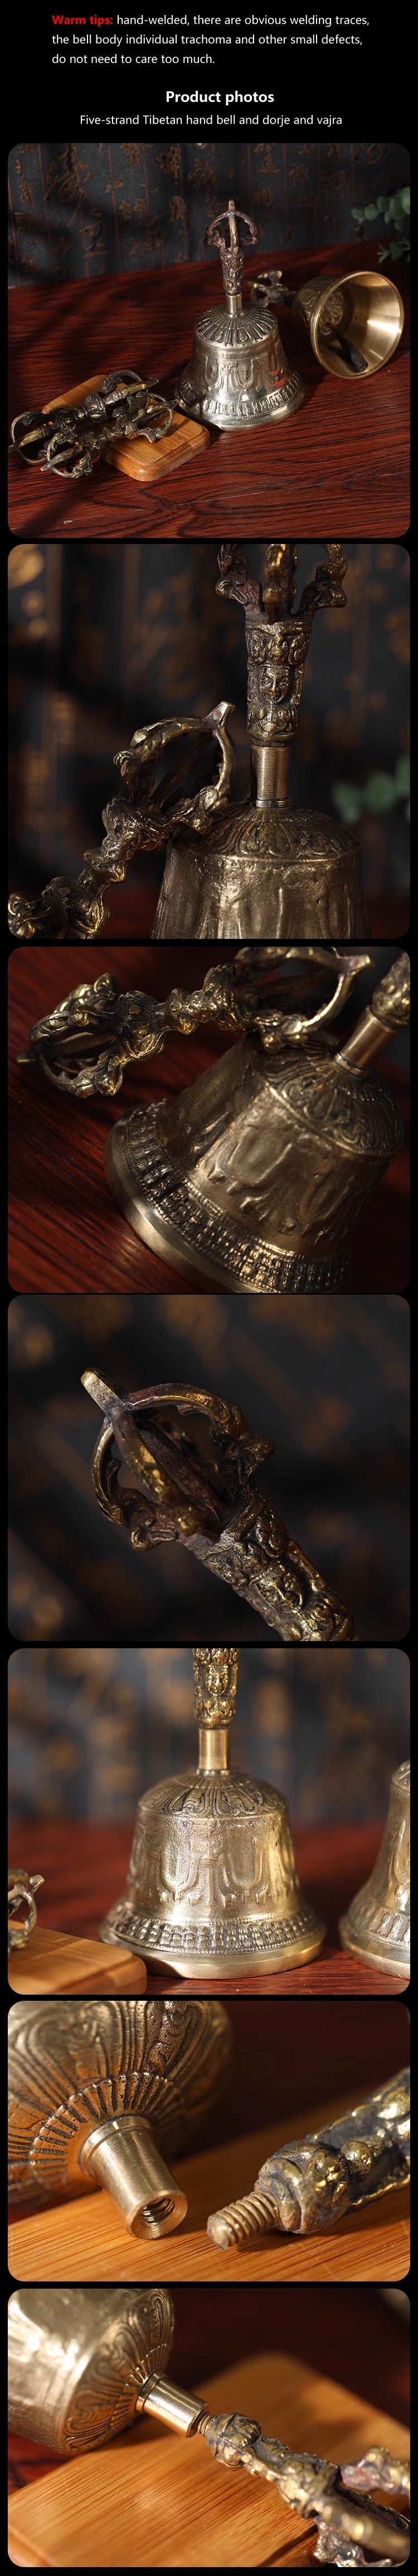 Five-strand Carving Tibetan Hanging Bell and Dorje Set, Product details introduction -1